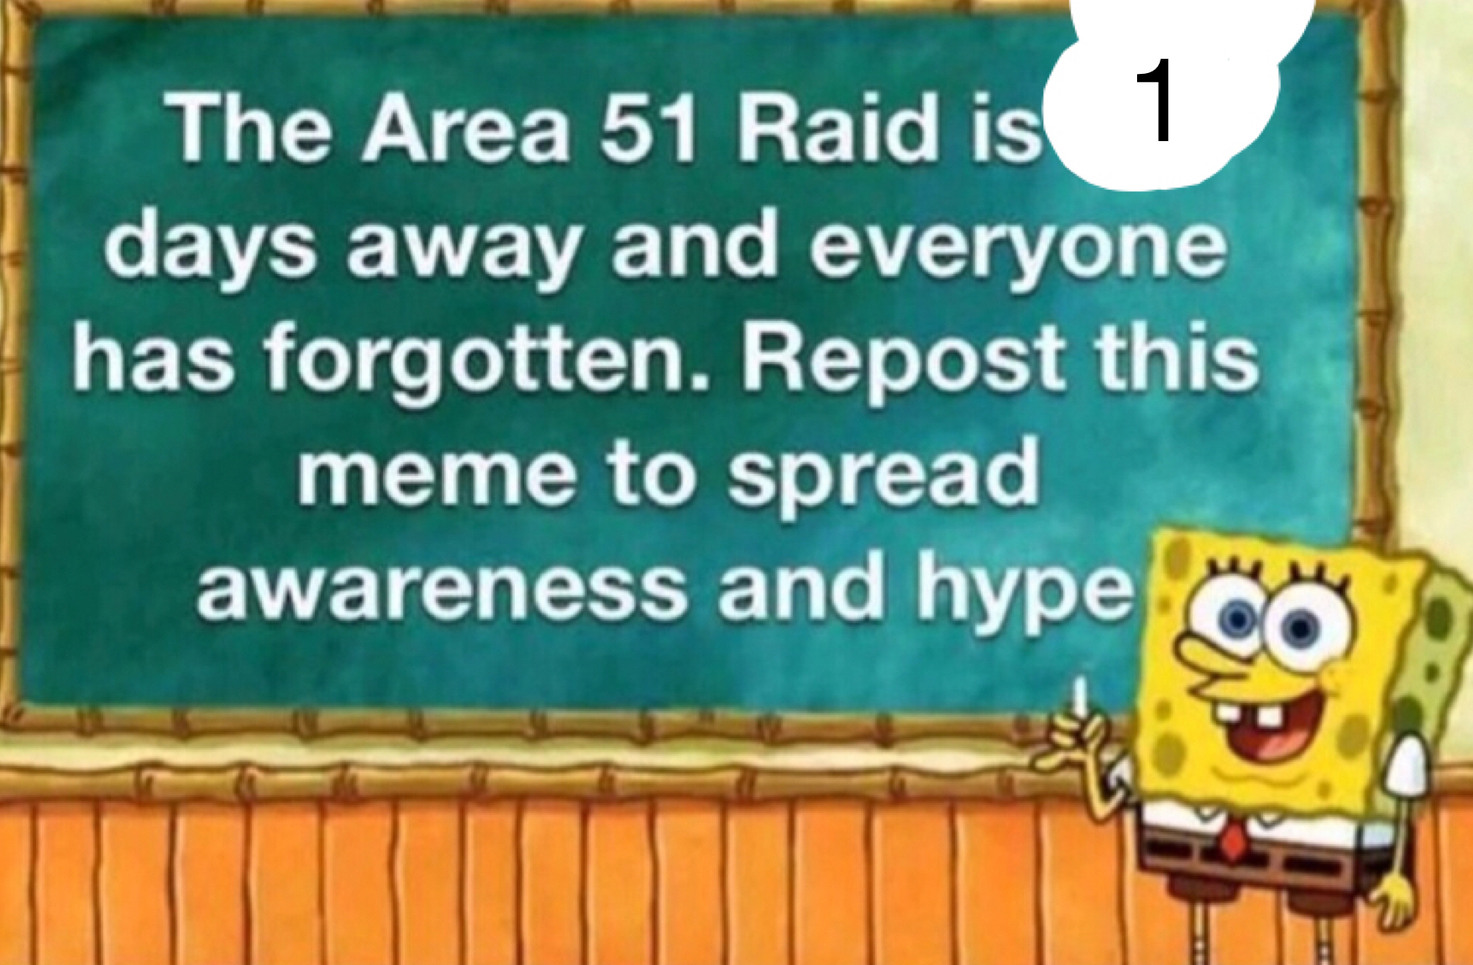 Raid area 51 - meme